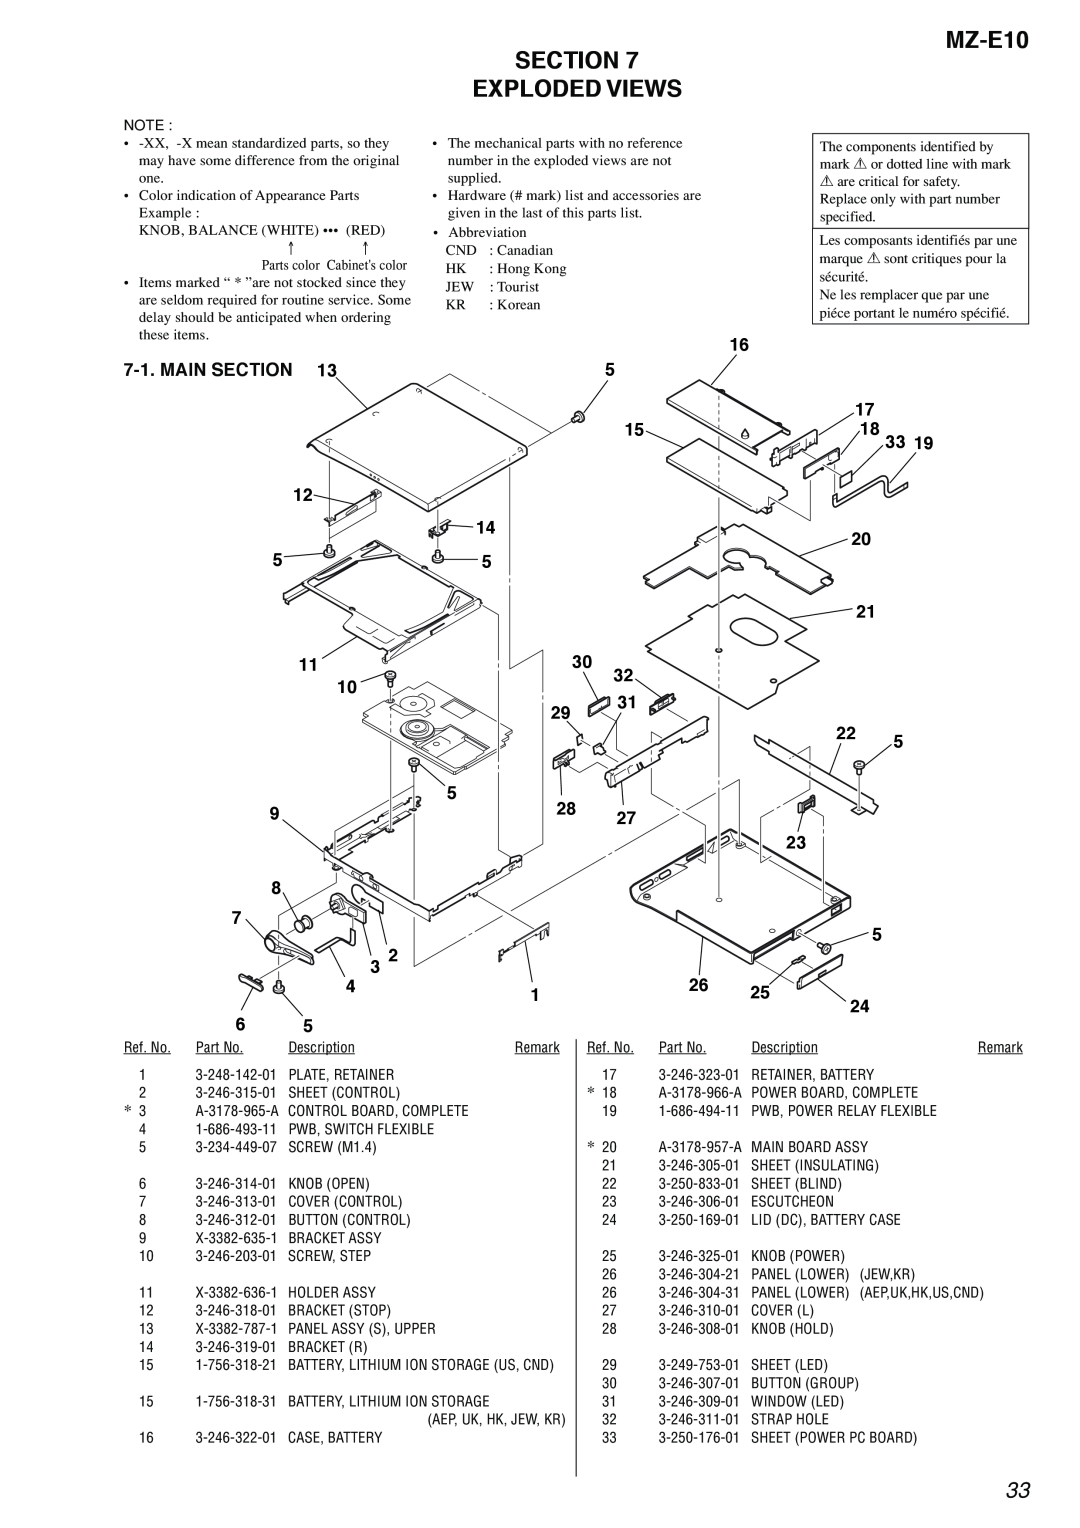 Sony MZ-E10 service manual Section Exploded Views, MAIN 5 